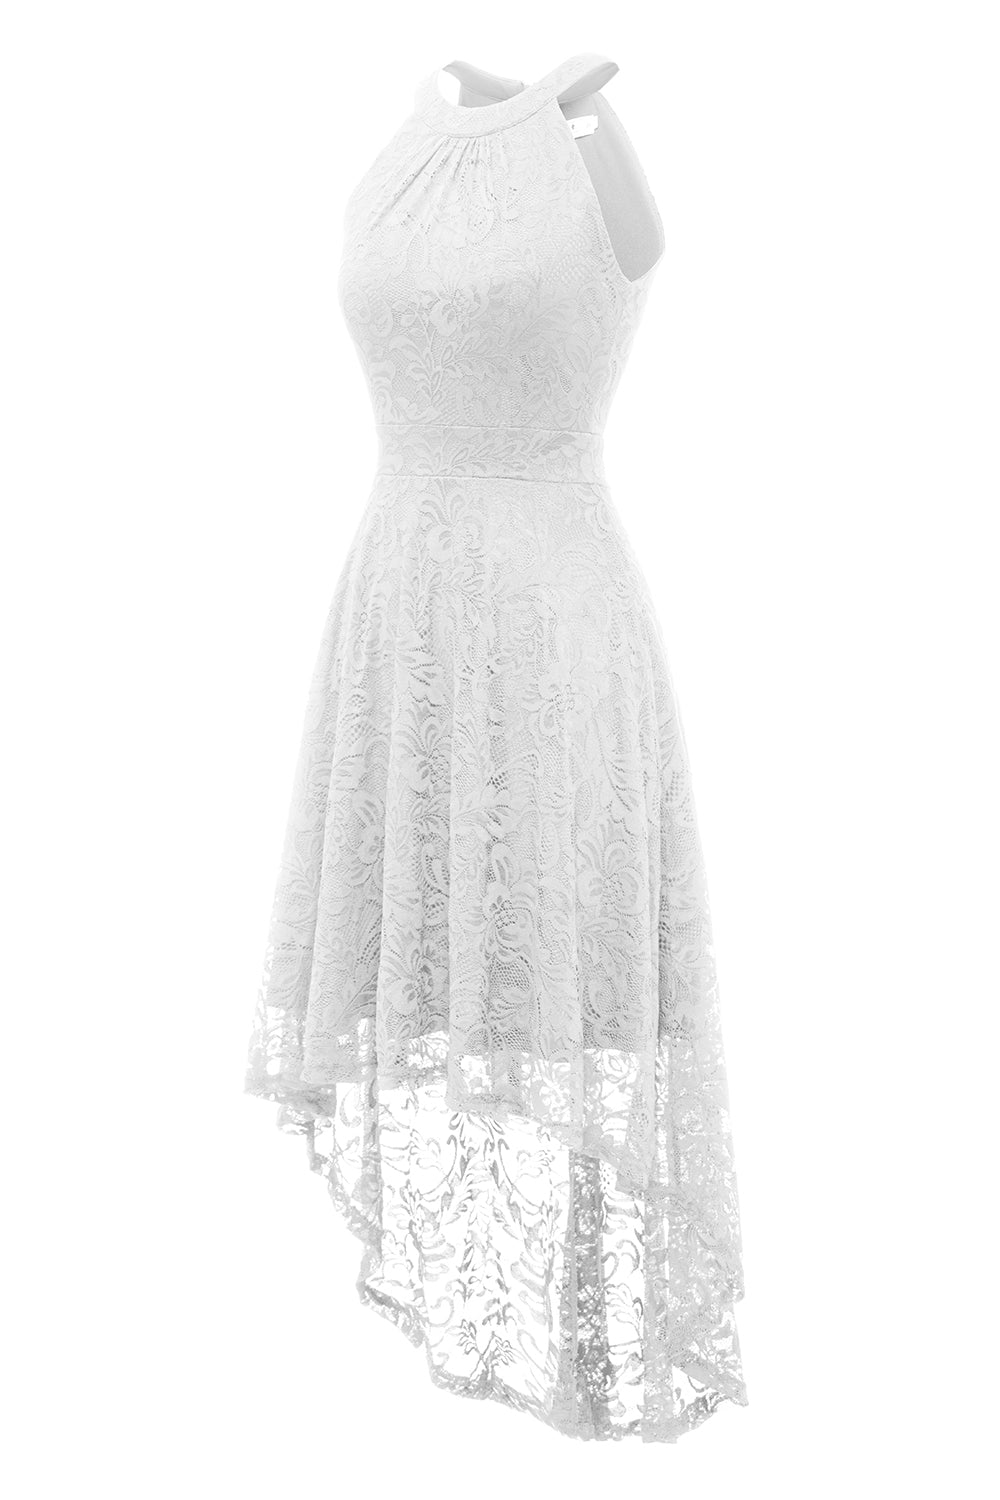 Zapaka Women High Low Lace Dress White Round Neck Short Bridesmaid Dress Zapaka 7215